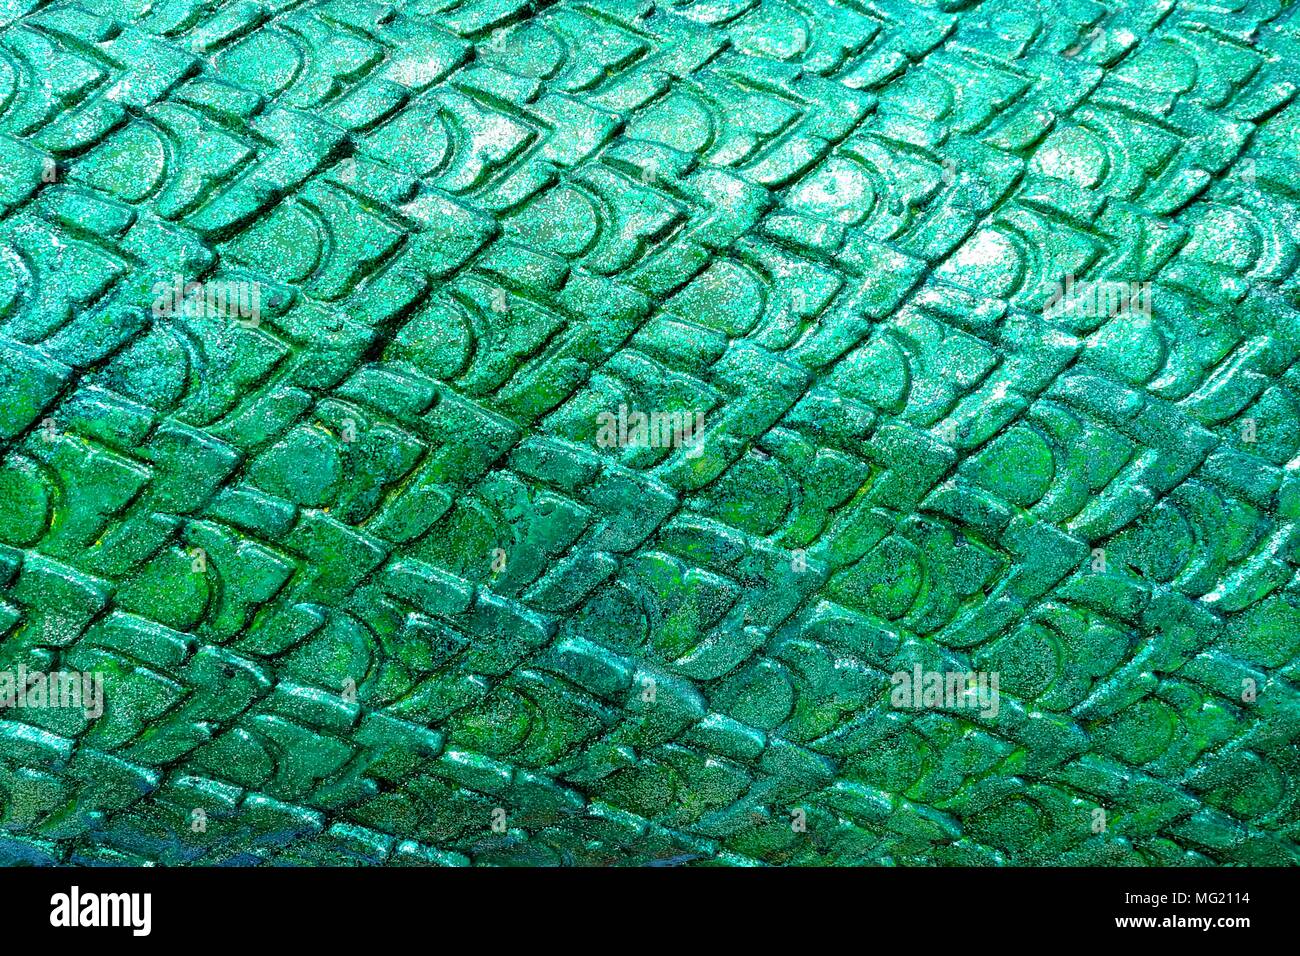 Green scale of naga statue Background Stock Photo - Alamy